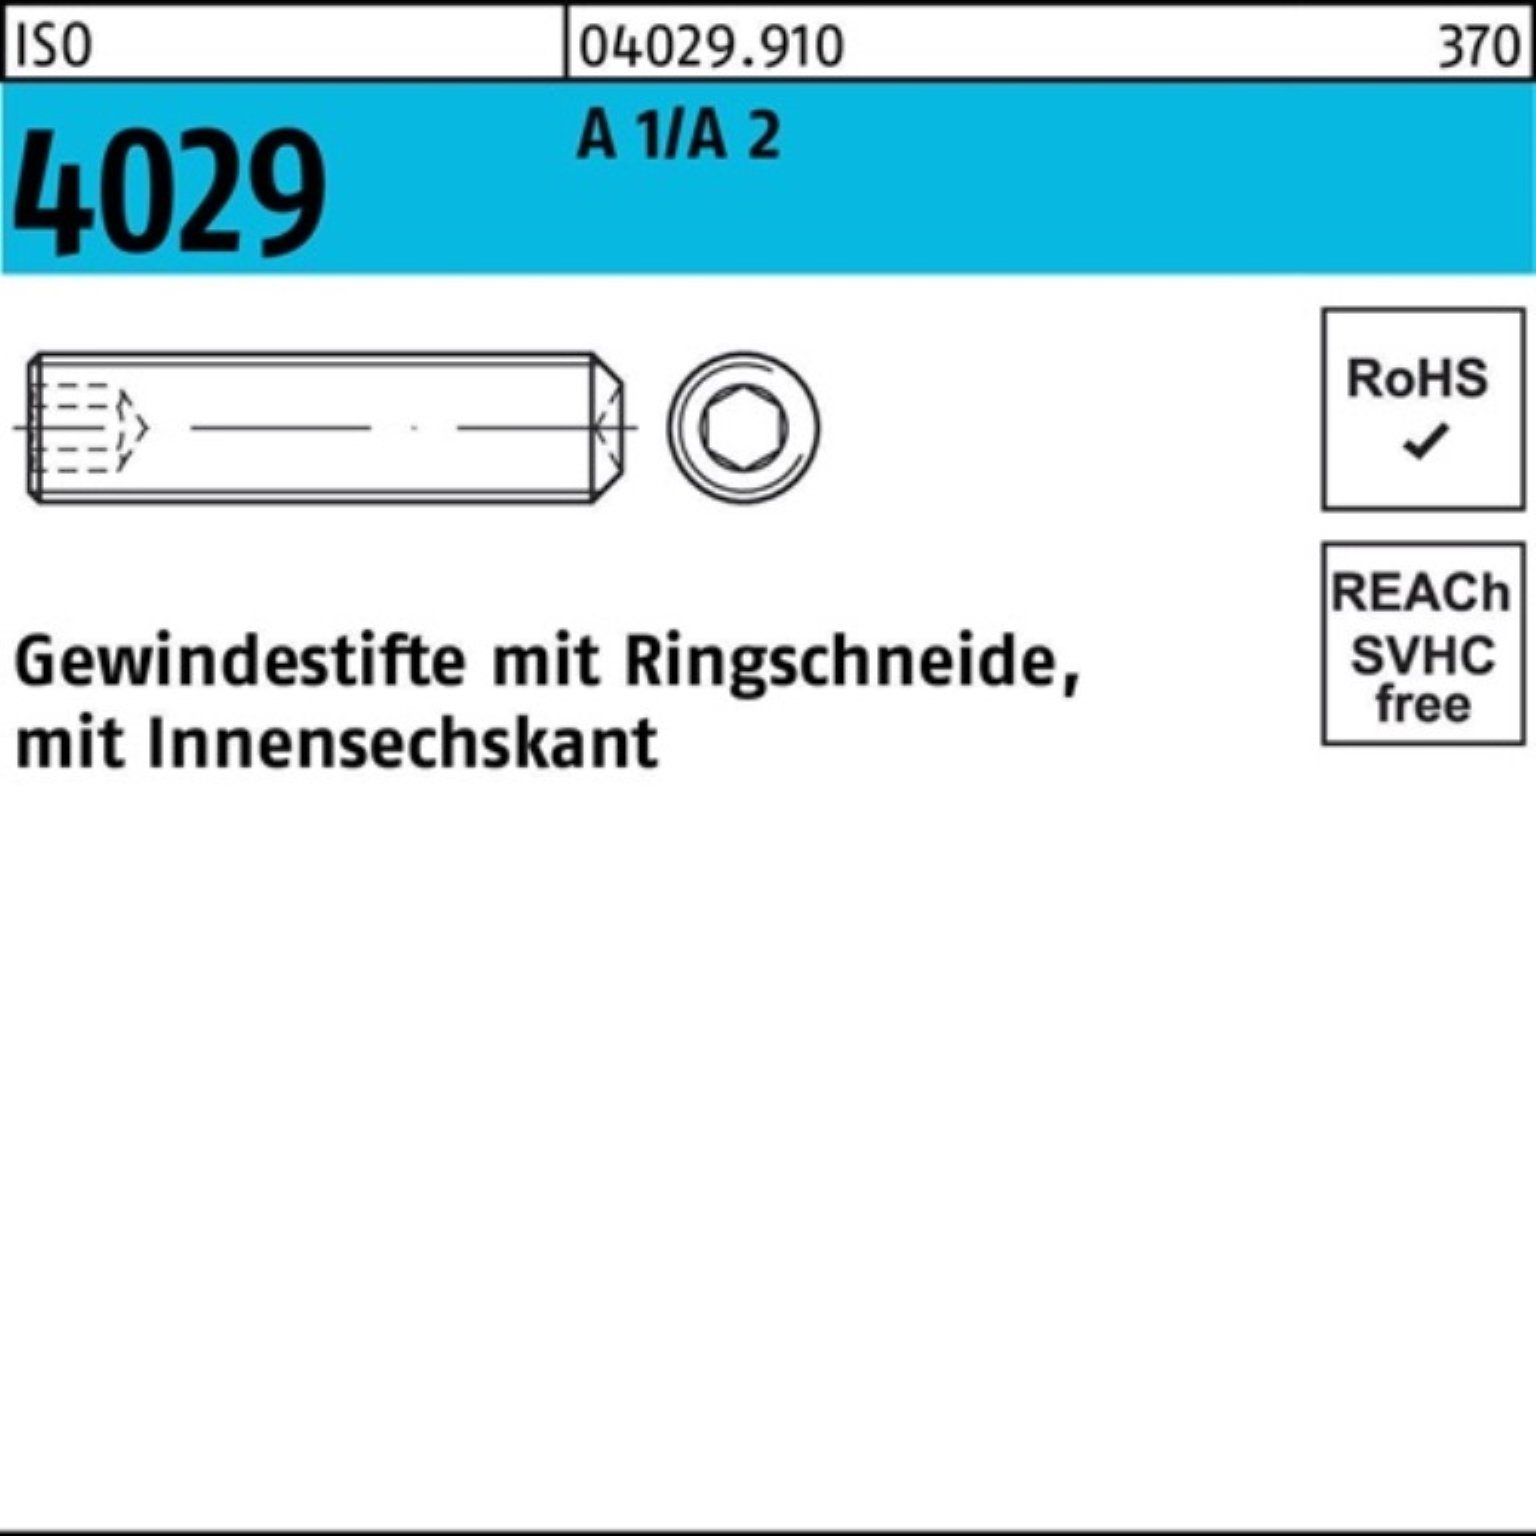 A Ringschneide/Innen-6kt 10 Gewindestift 30 M16x 4029 Gewindebolzen 2 ISO Reyher Pack 100er